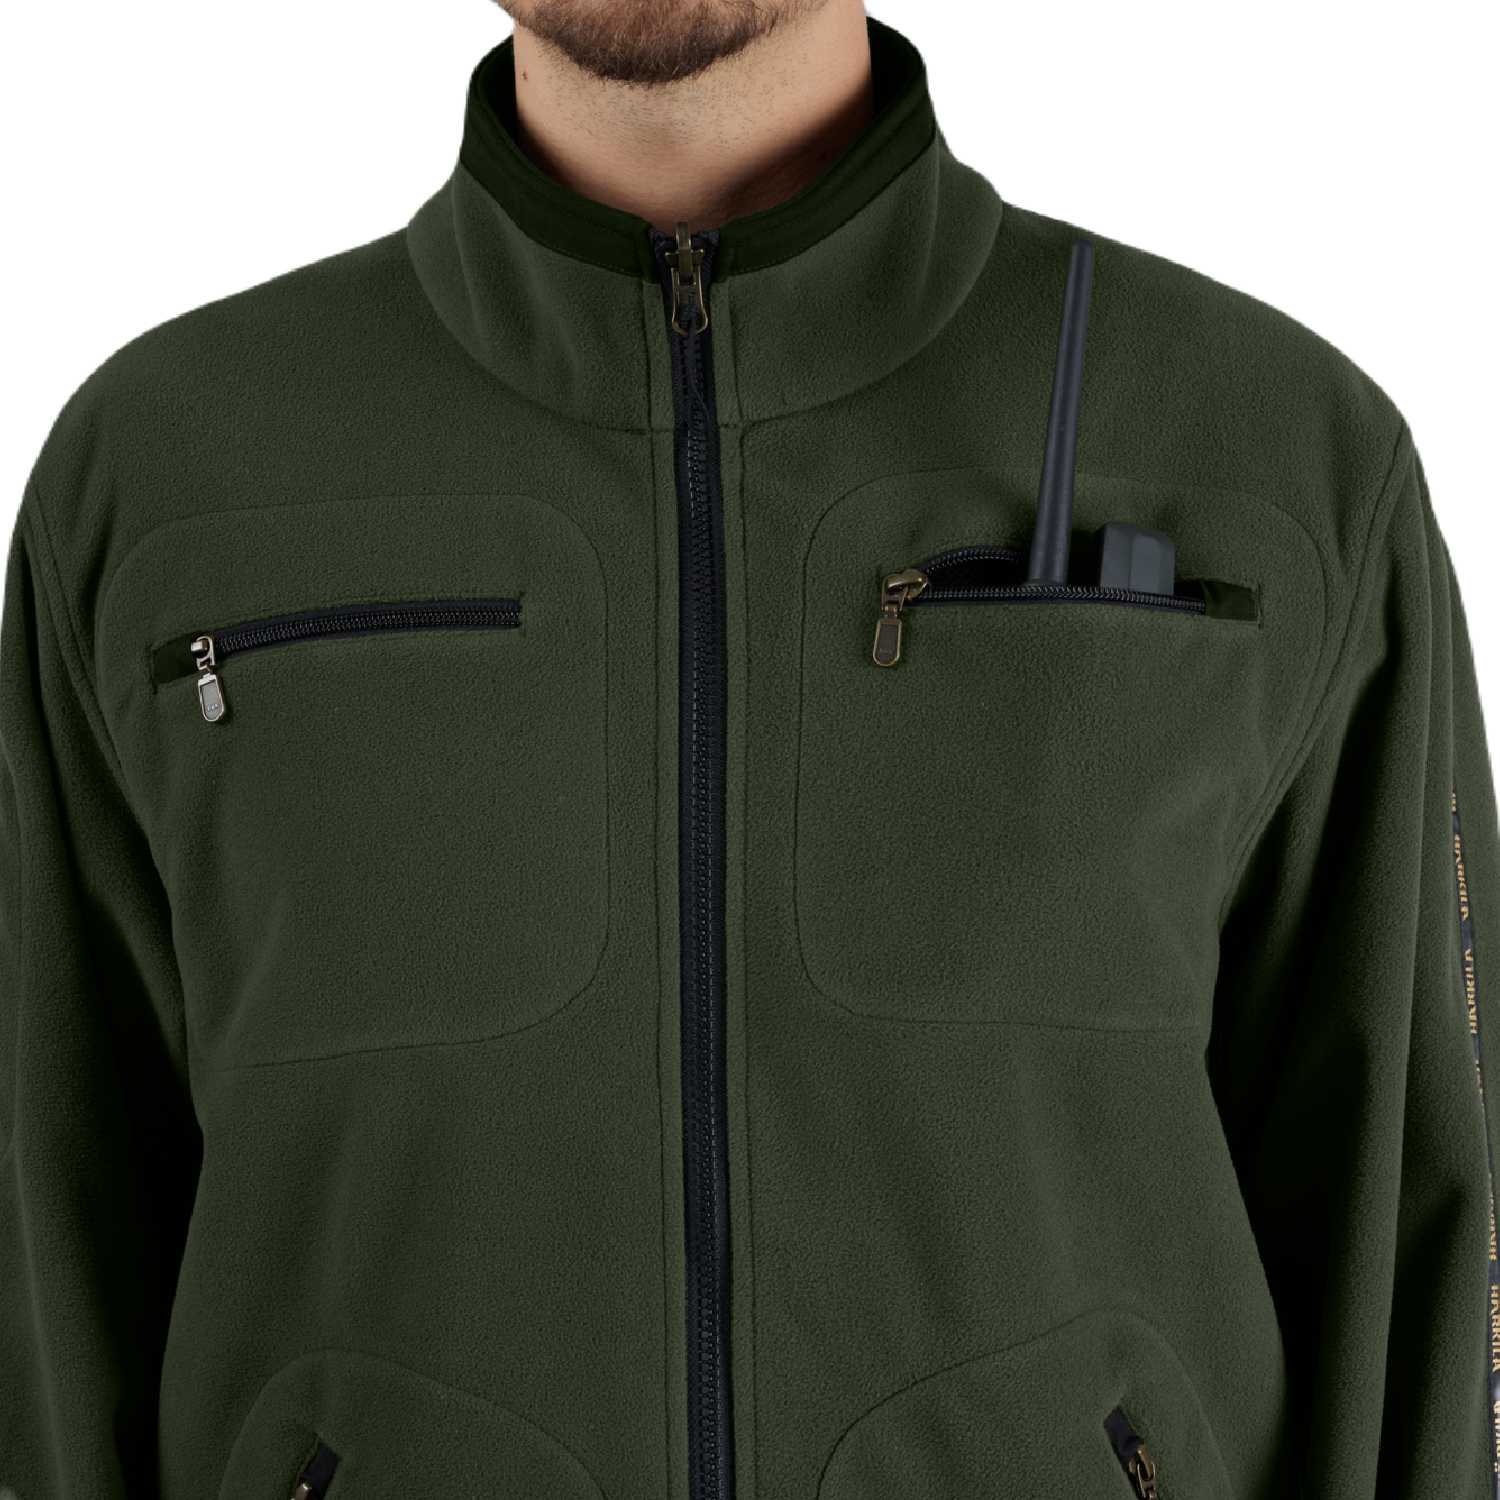 Harkila Kamko Reversible Windstopper Fleece Jacket in Grey and Green 